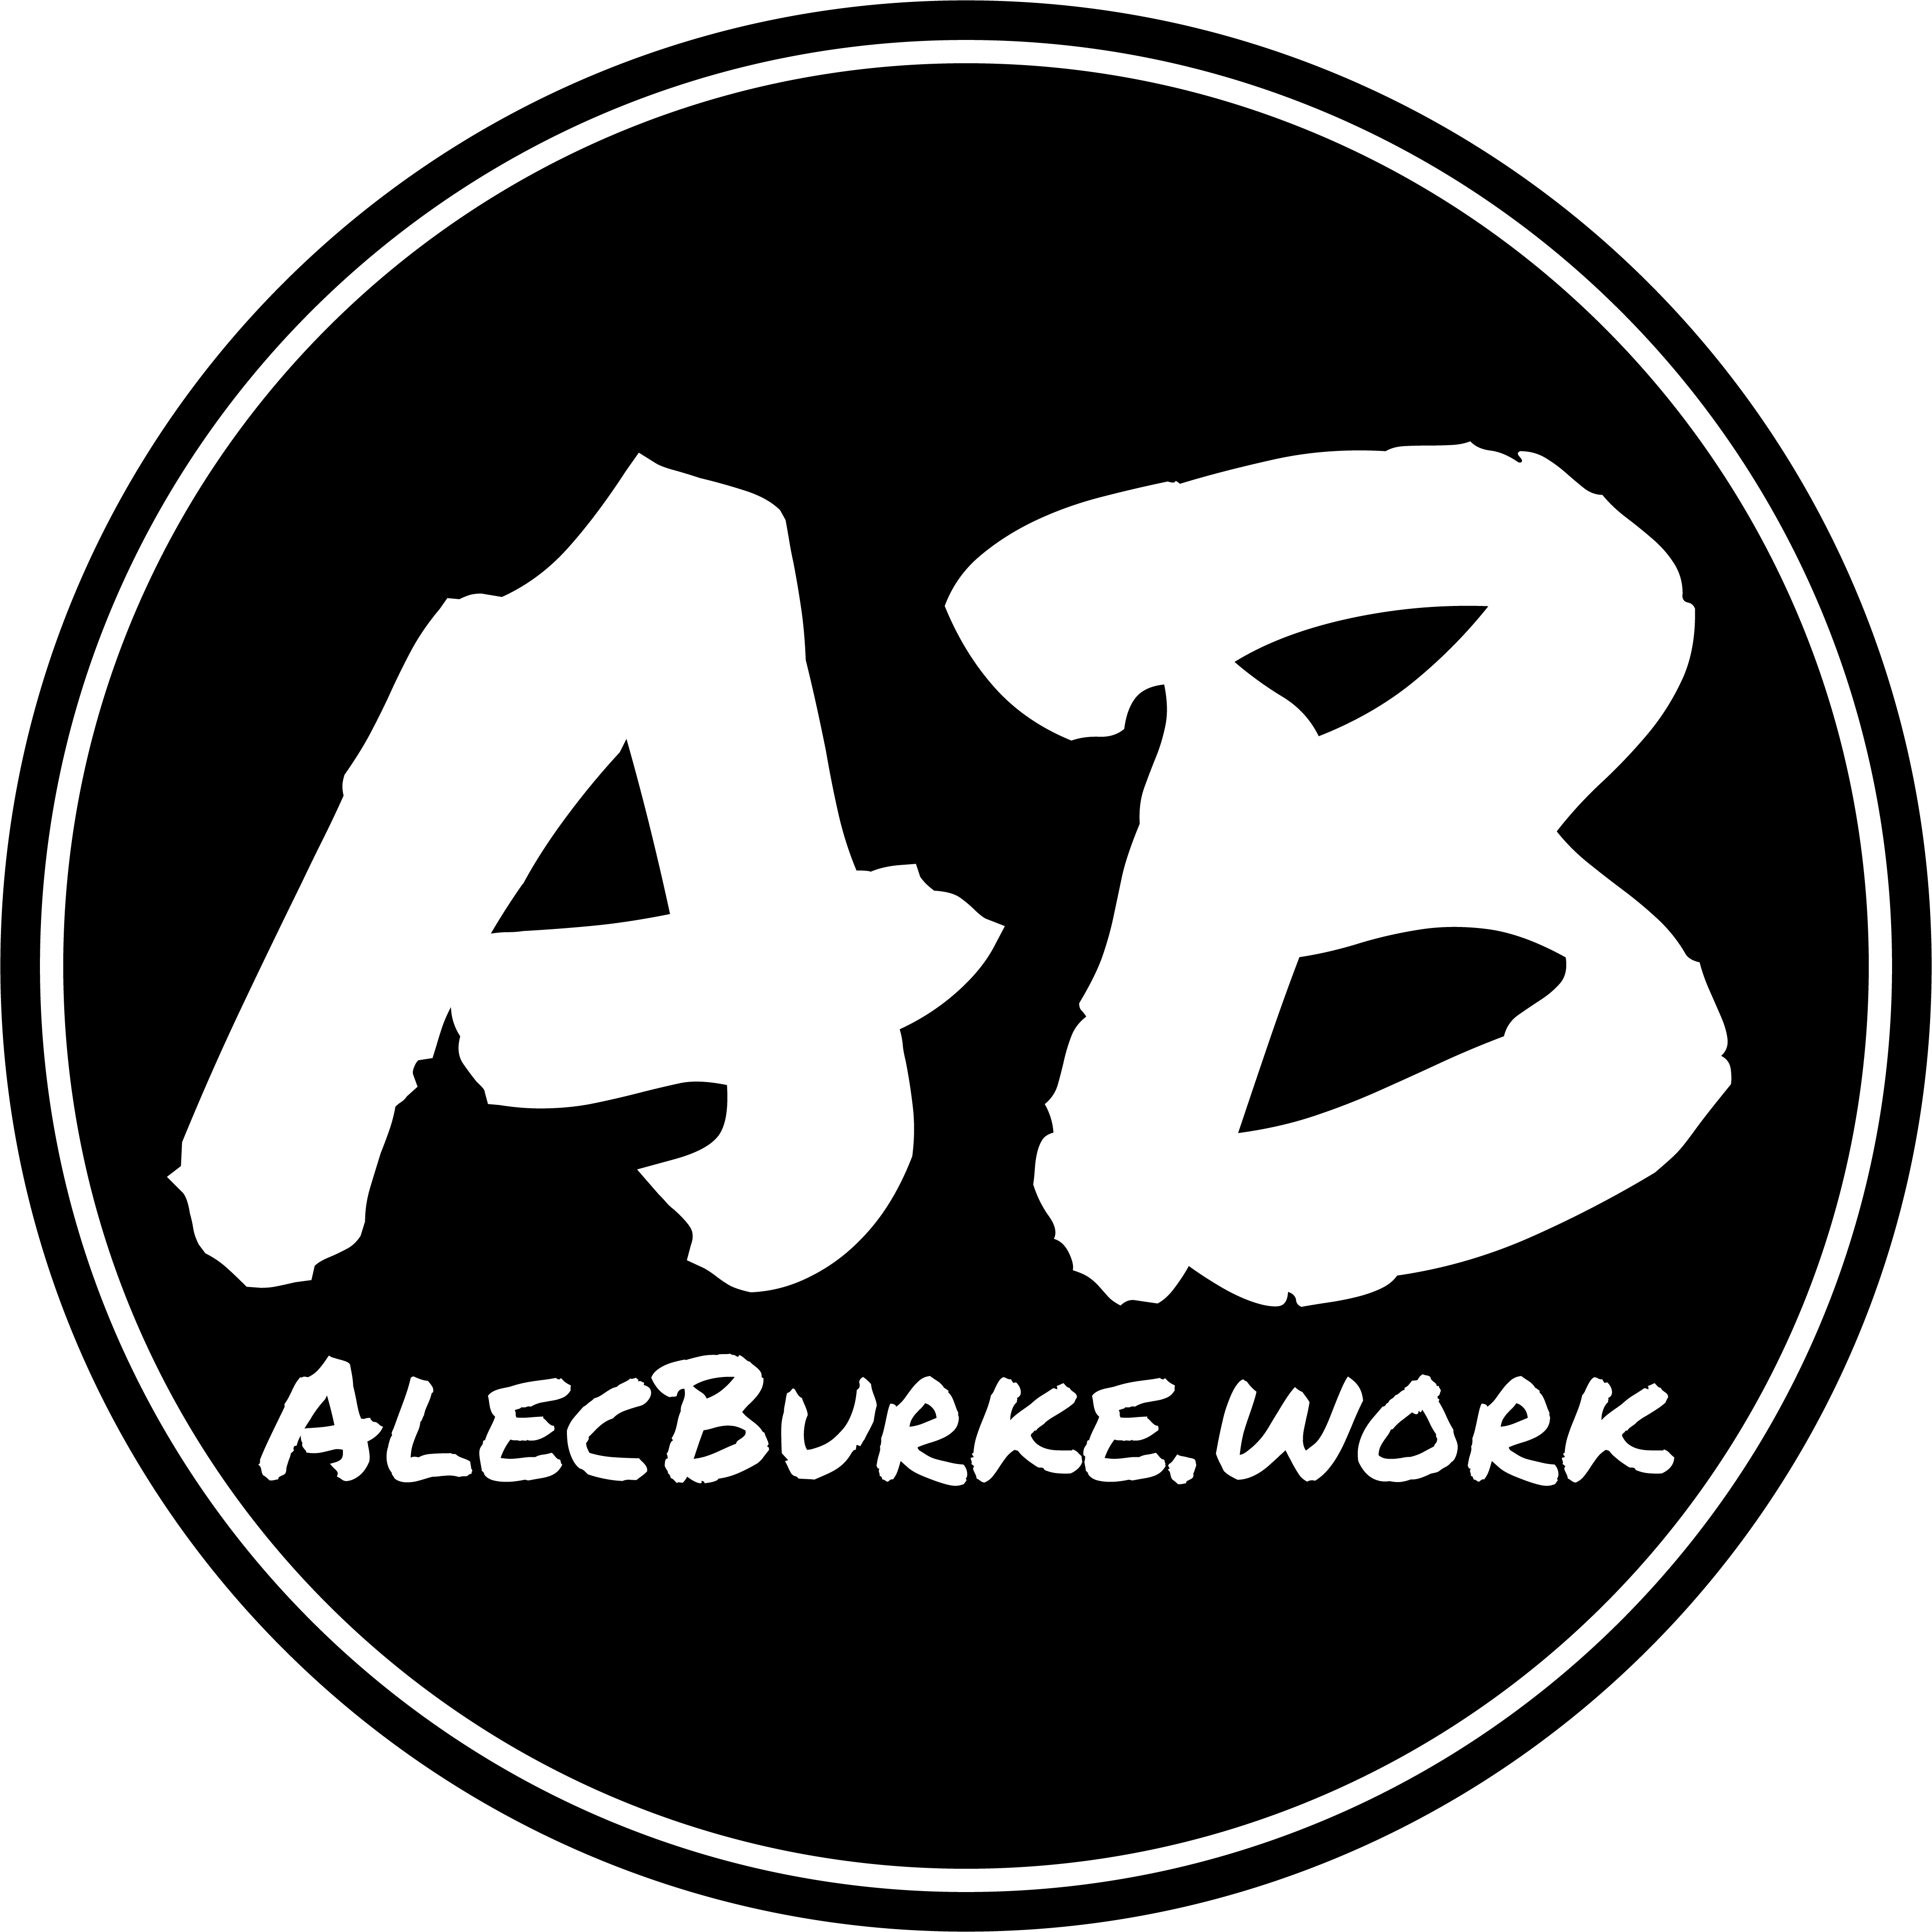 Alec@alecburke.work // 206-234-9587